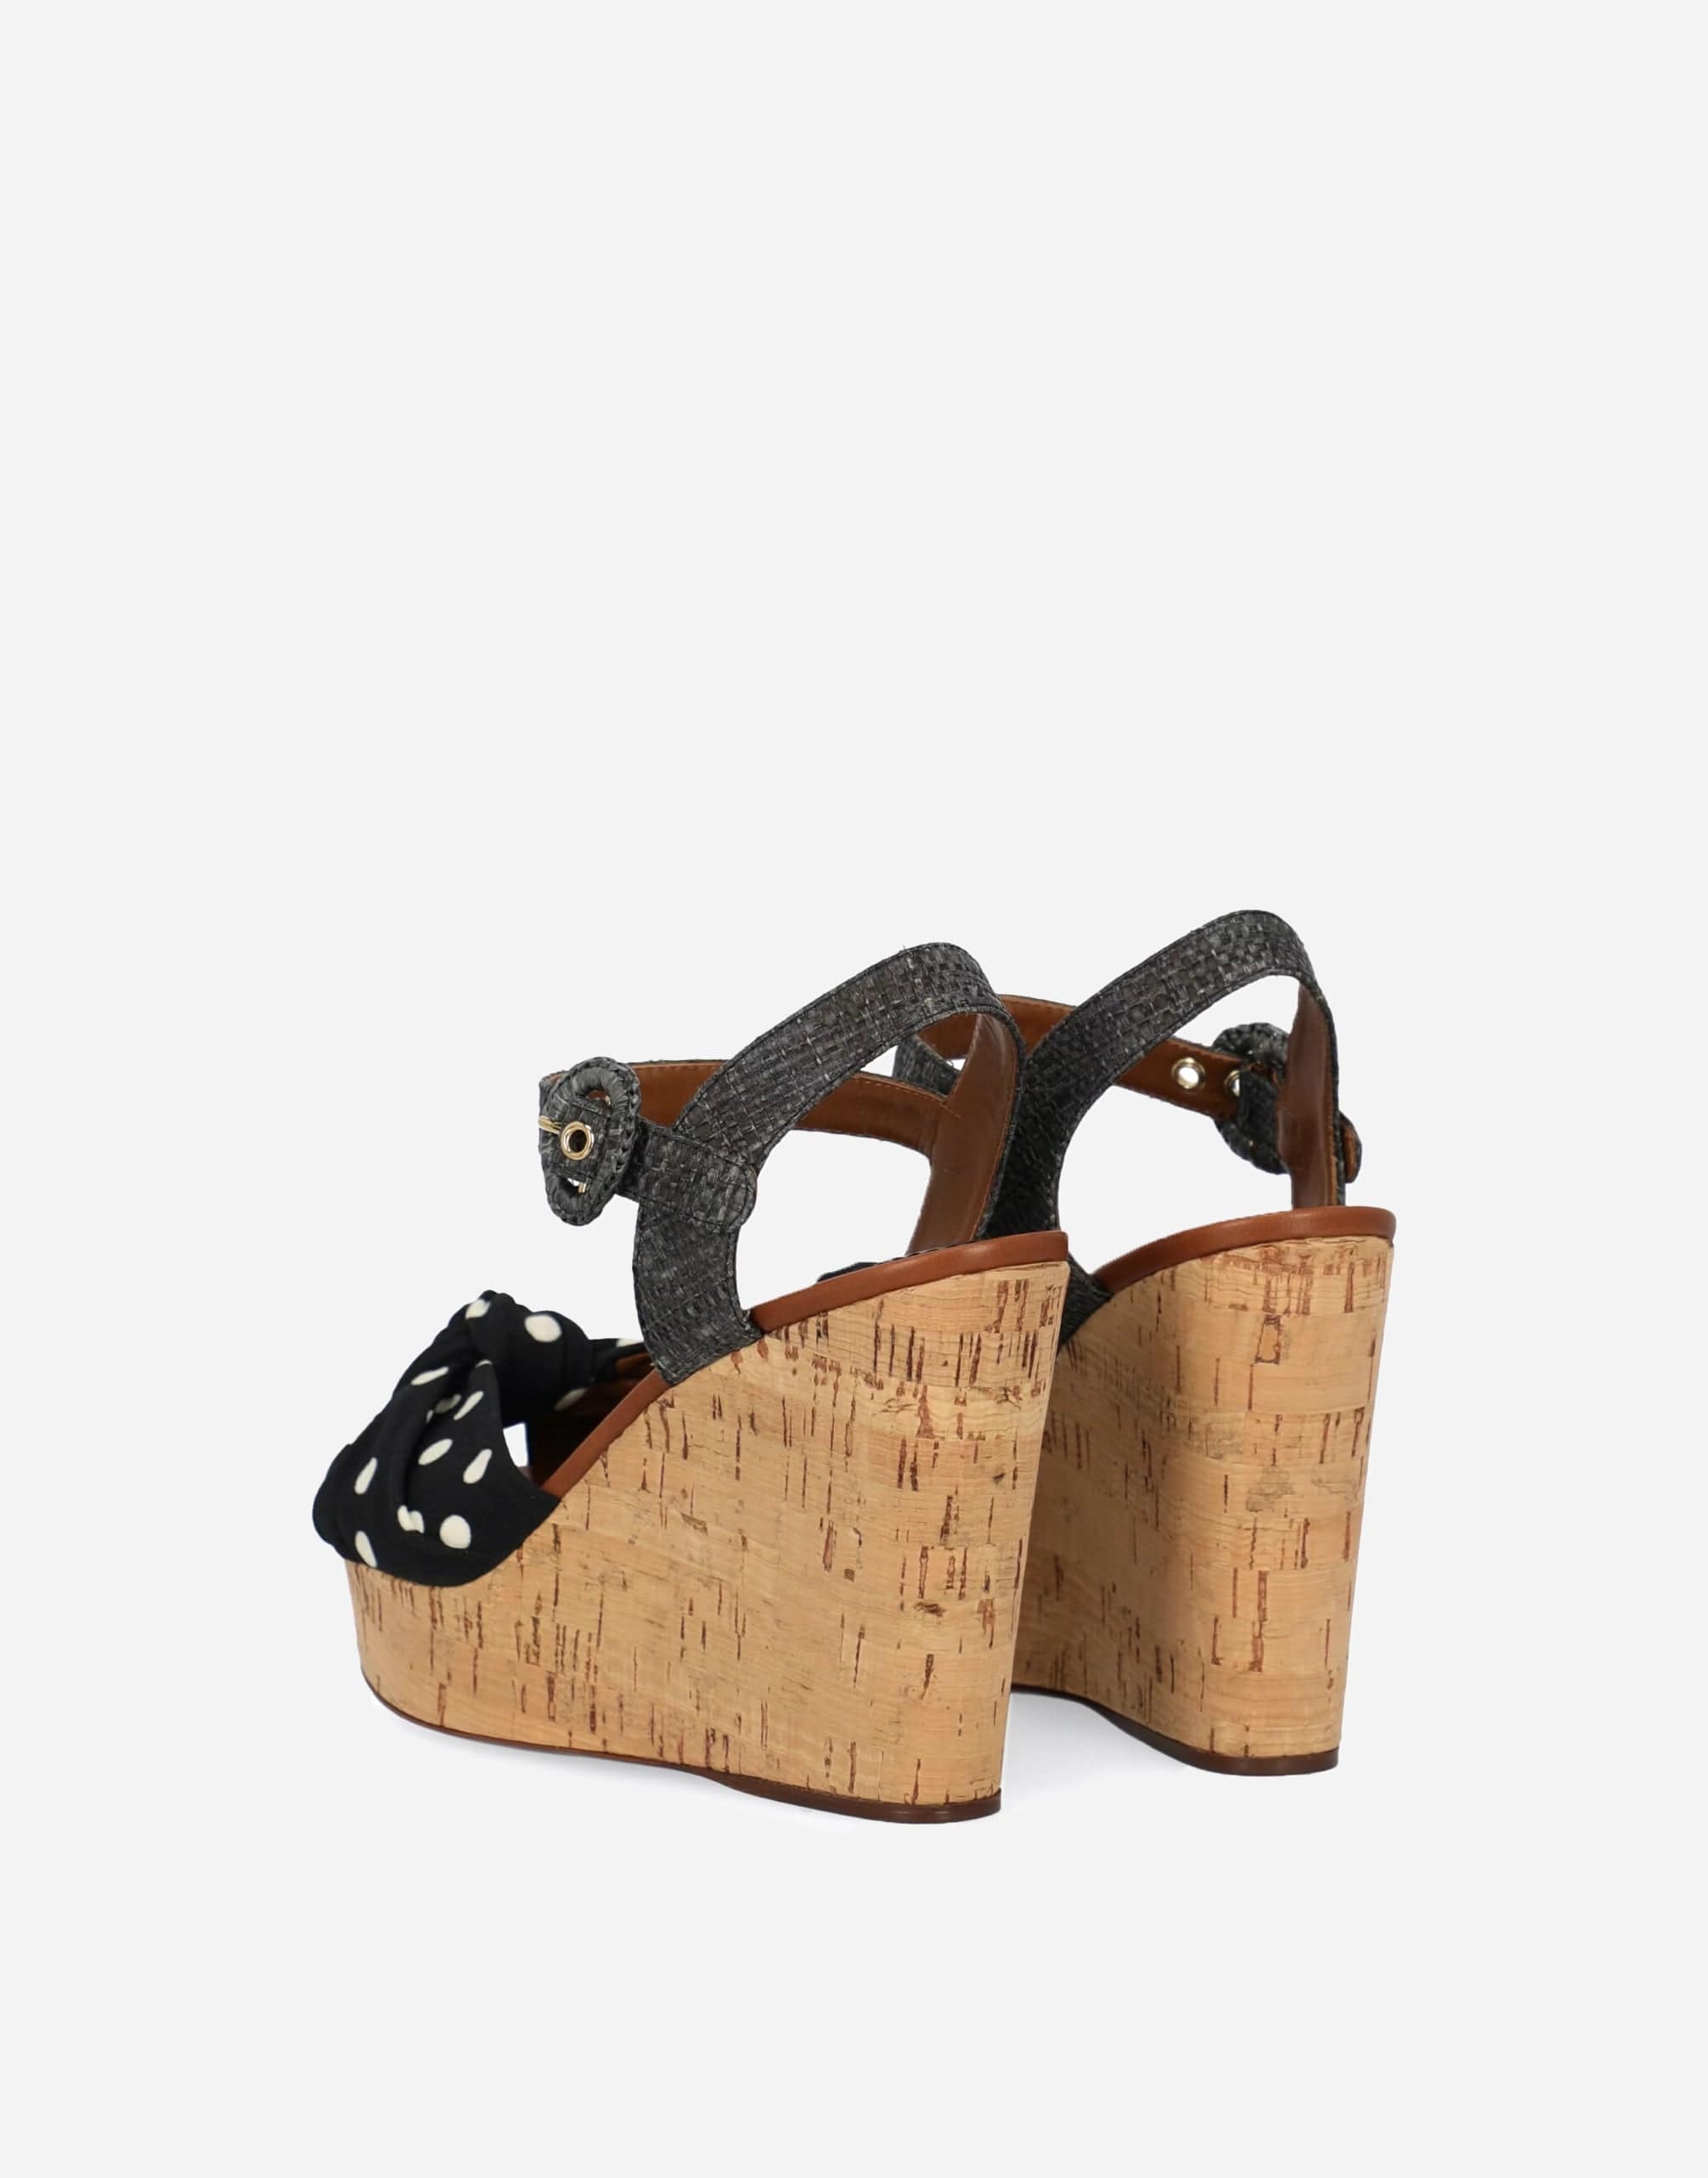 Dolce & Gabbana Black  Wedges Polka Dotted Ankle Strap Shoes Sandals